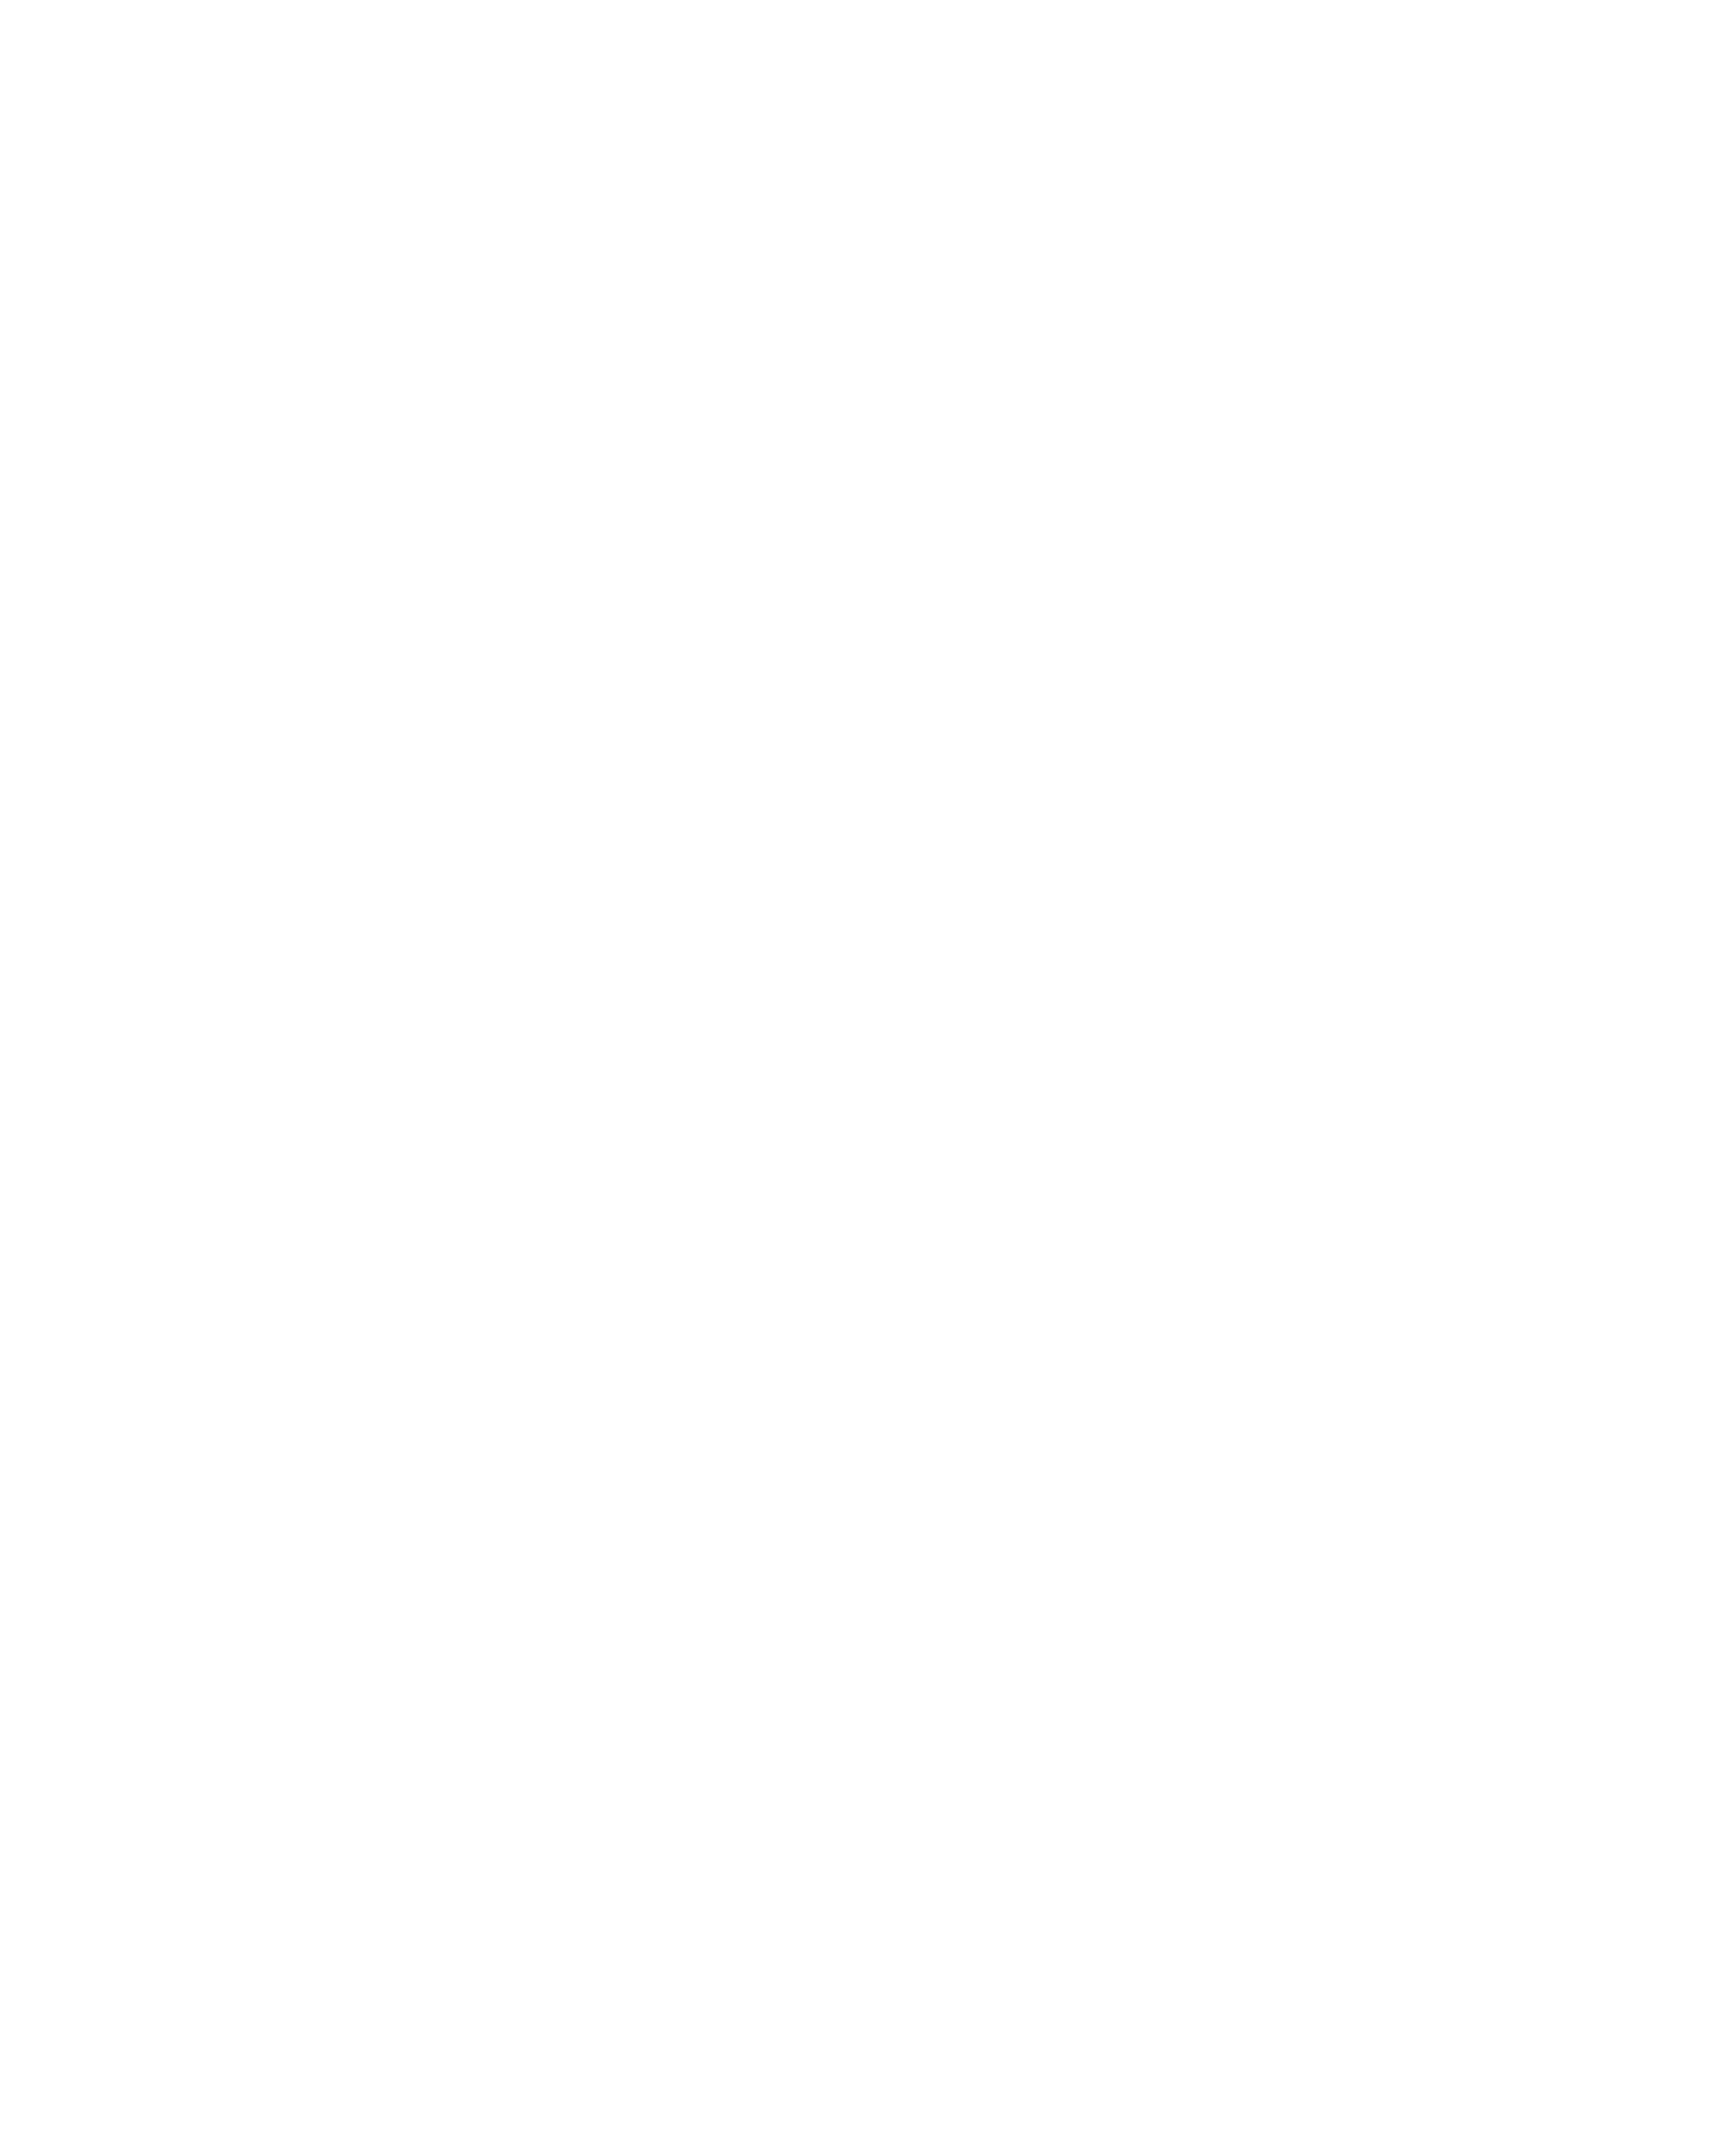 Strategies Logo